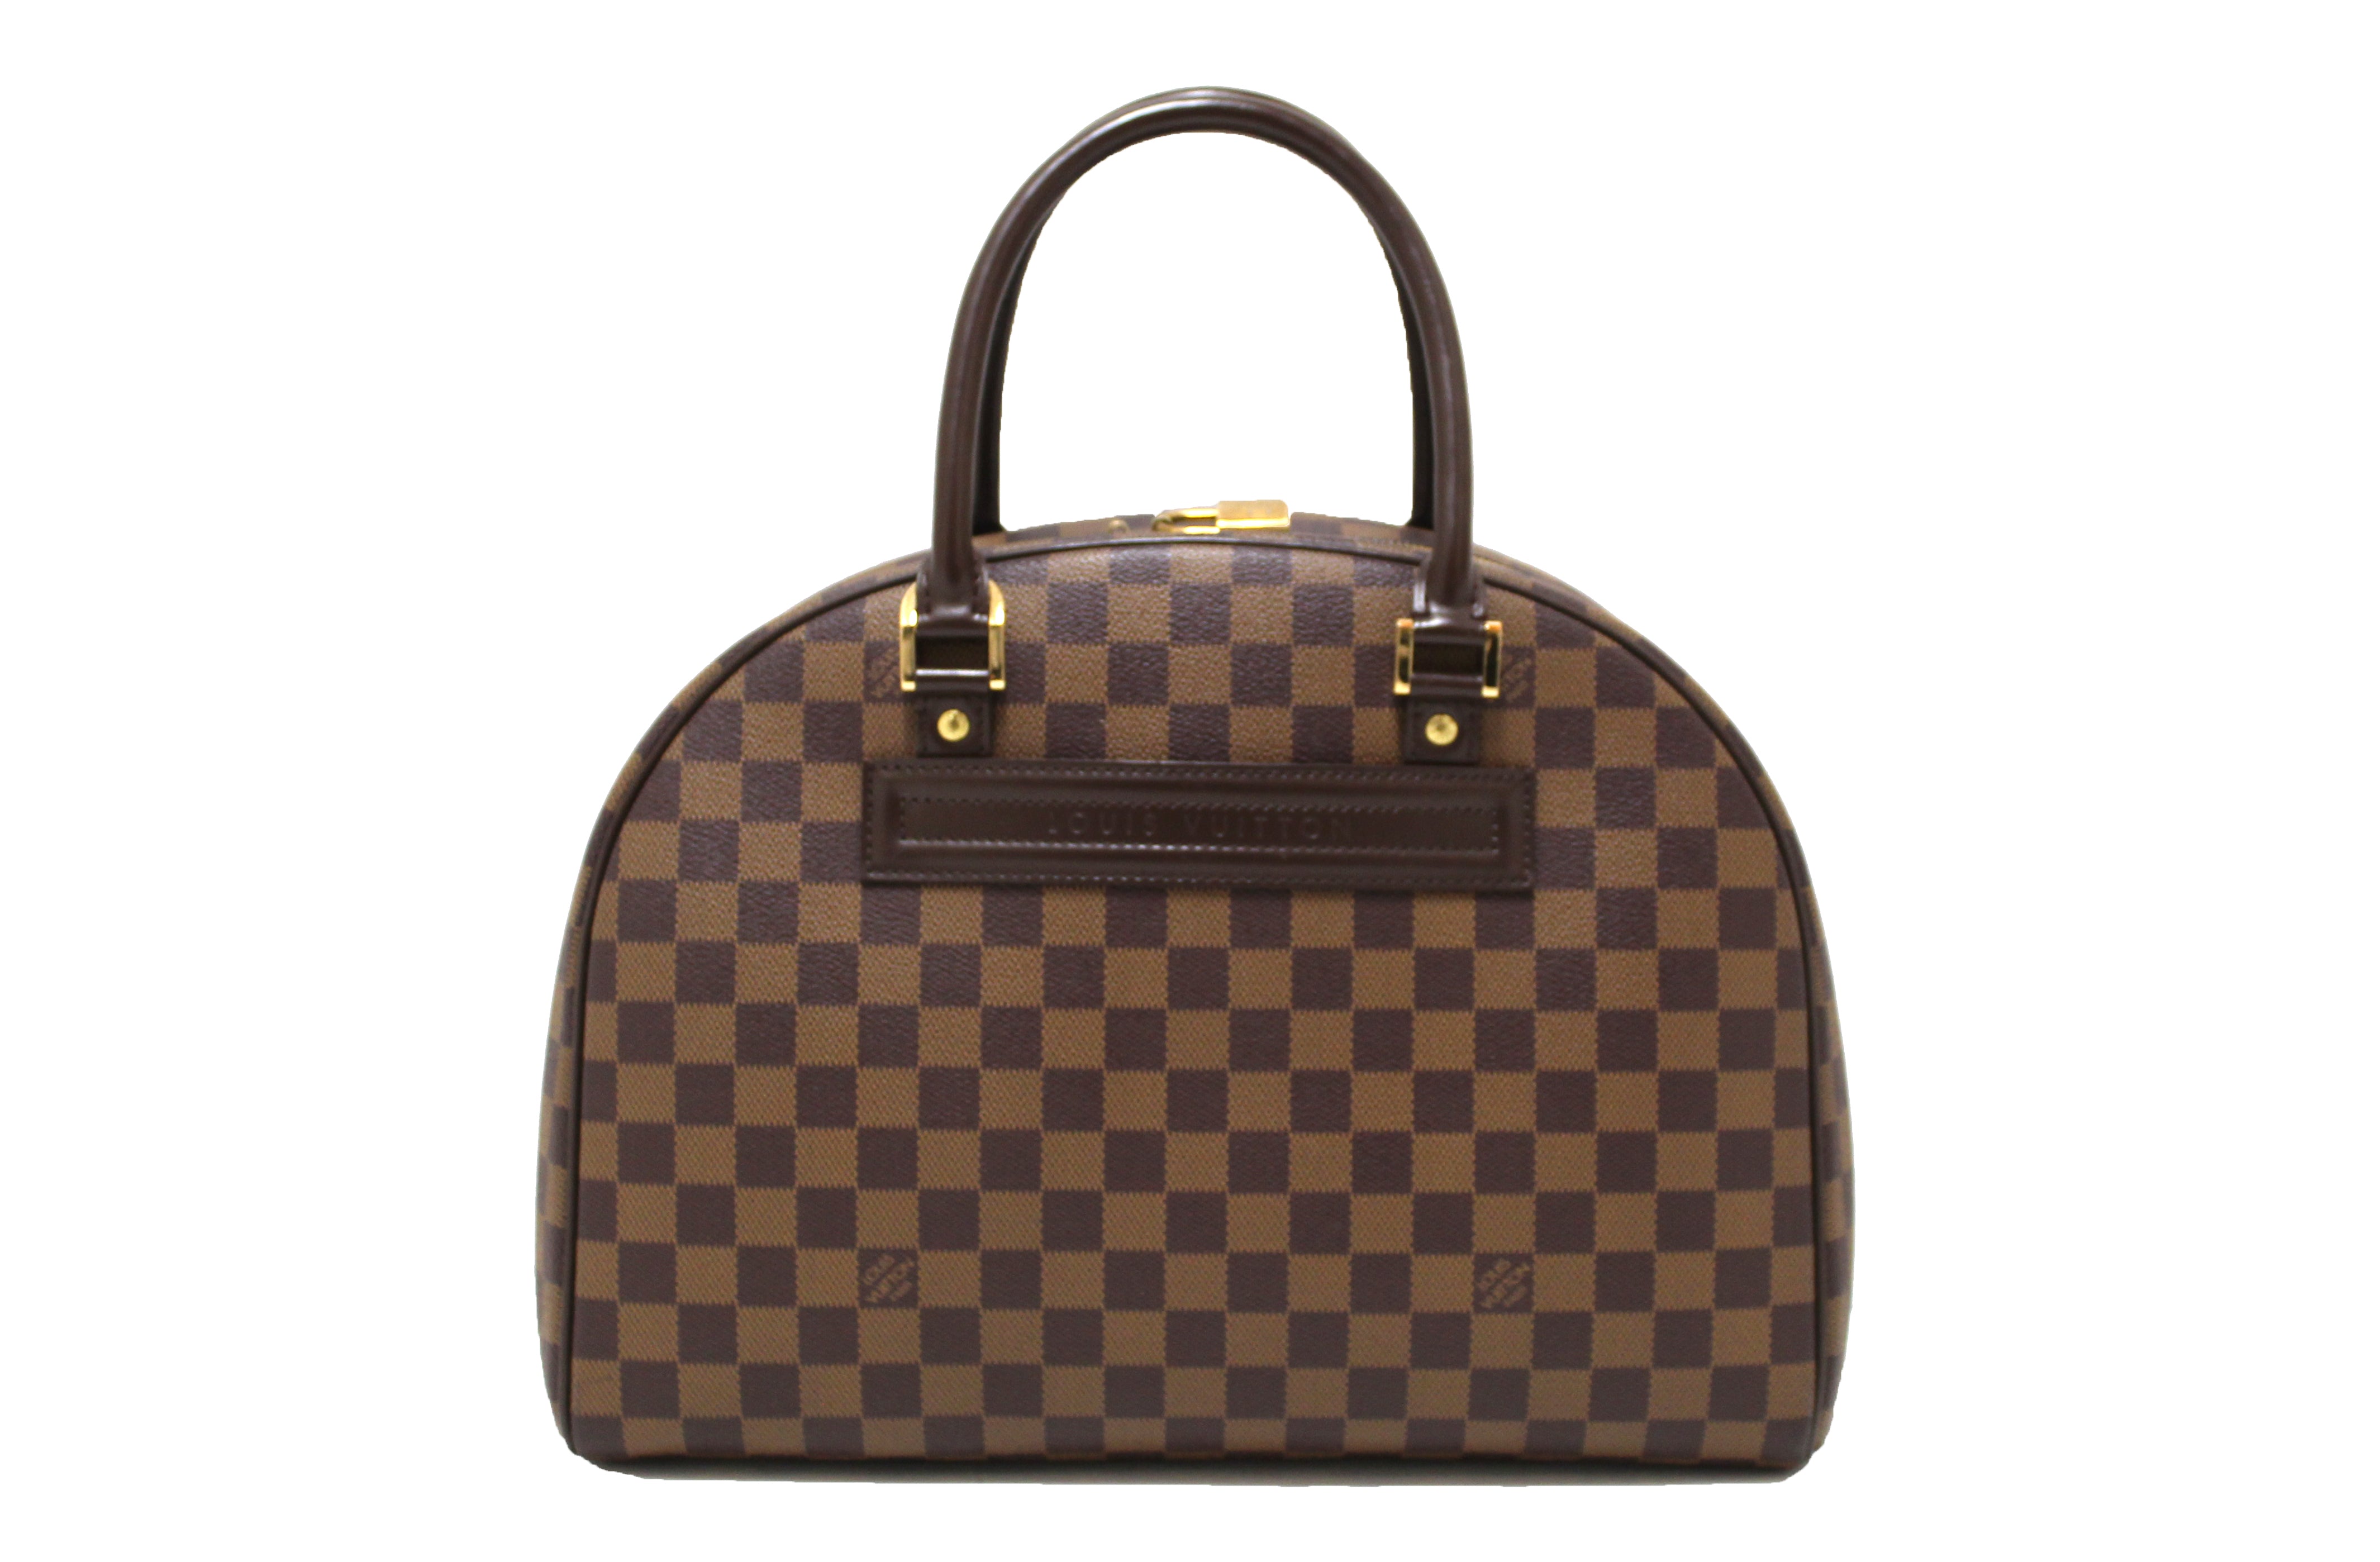 Authentic Louis Vuitton Damier Ebene Nolita Handbag